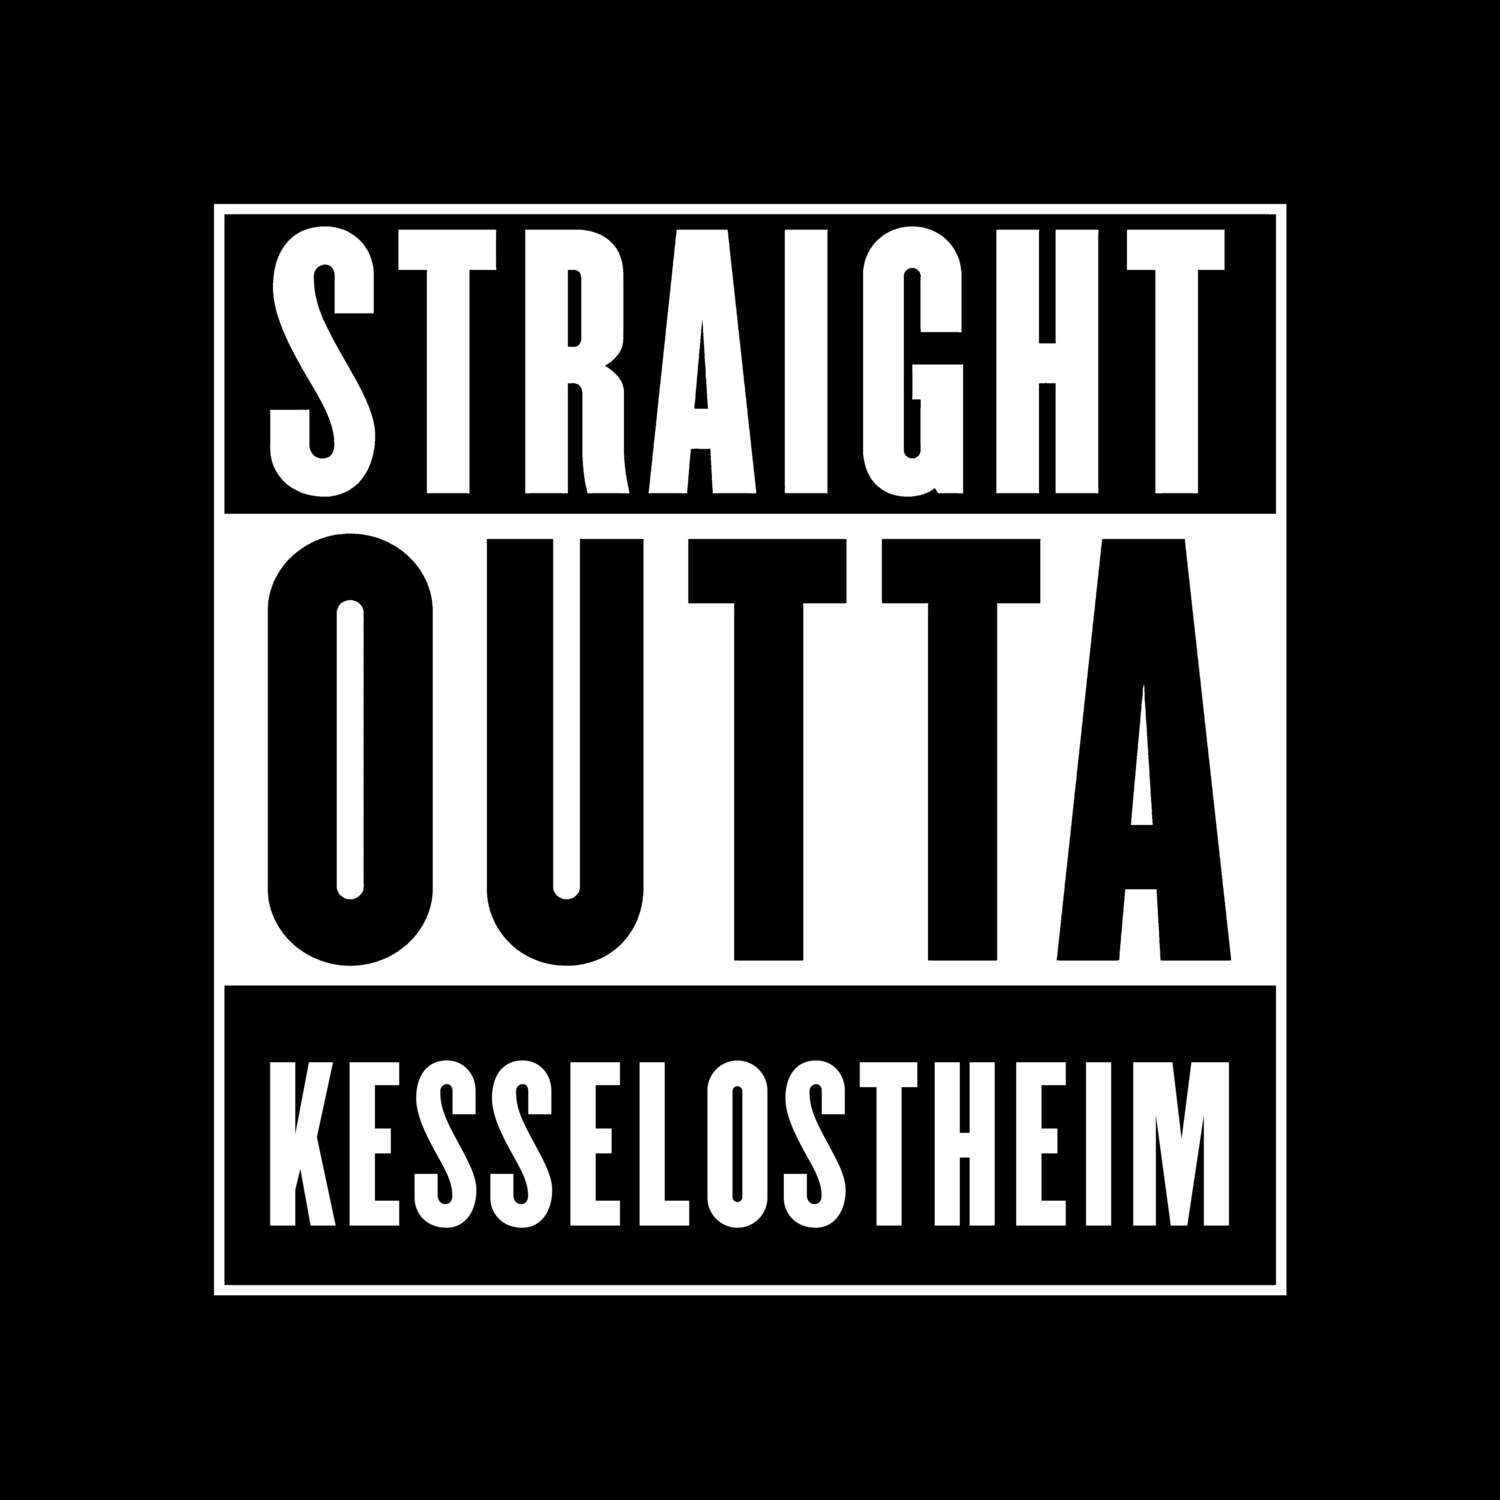 Kesselostheim T-Shirt »Straight Outta«